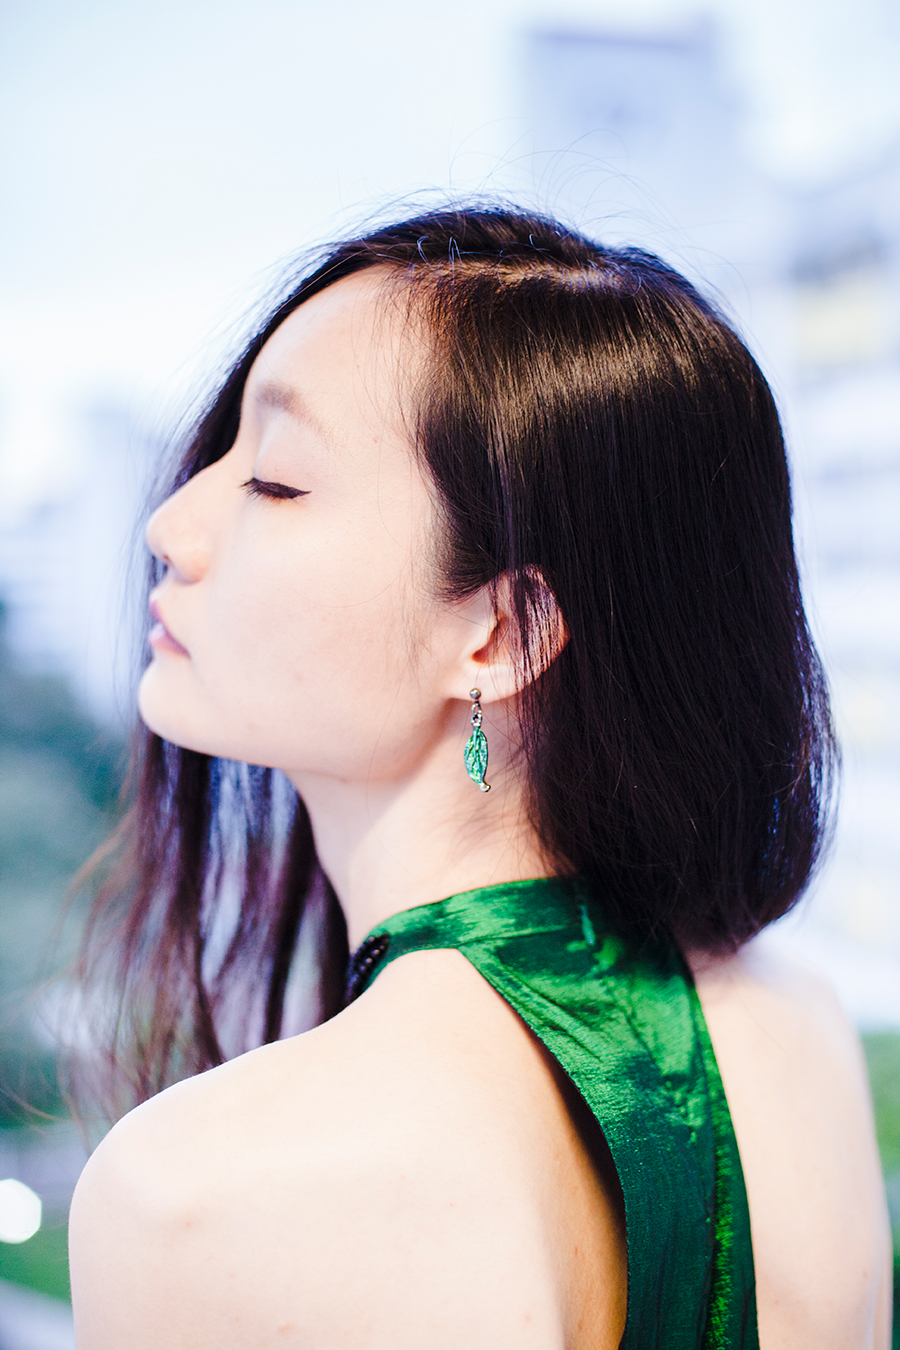 Green satin backless dress from CNDirect, Dressin green leaf earrings.